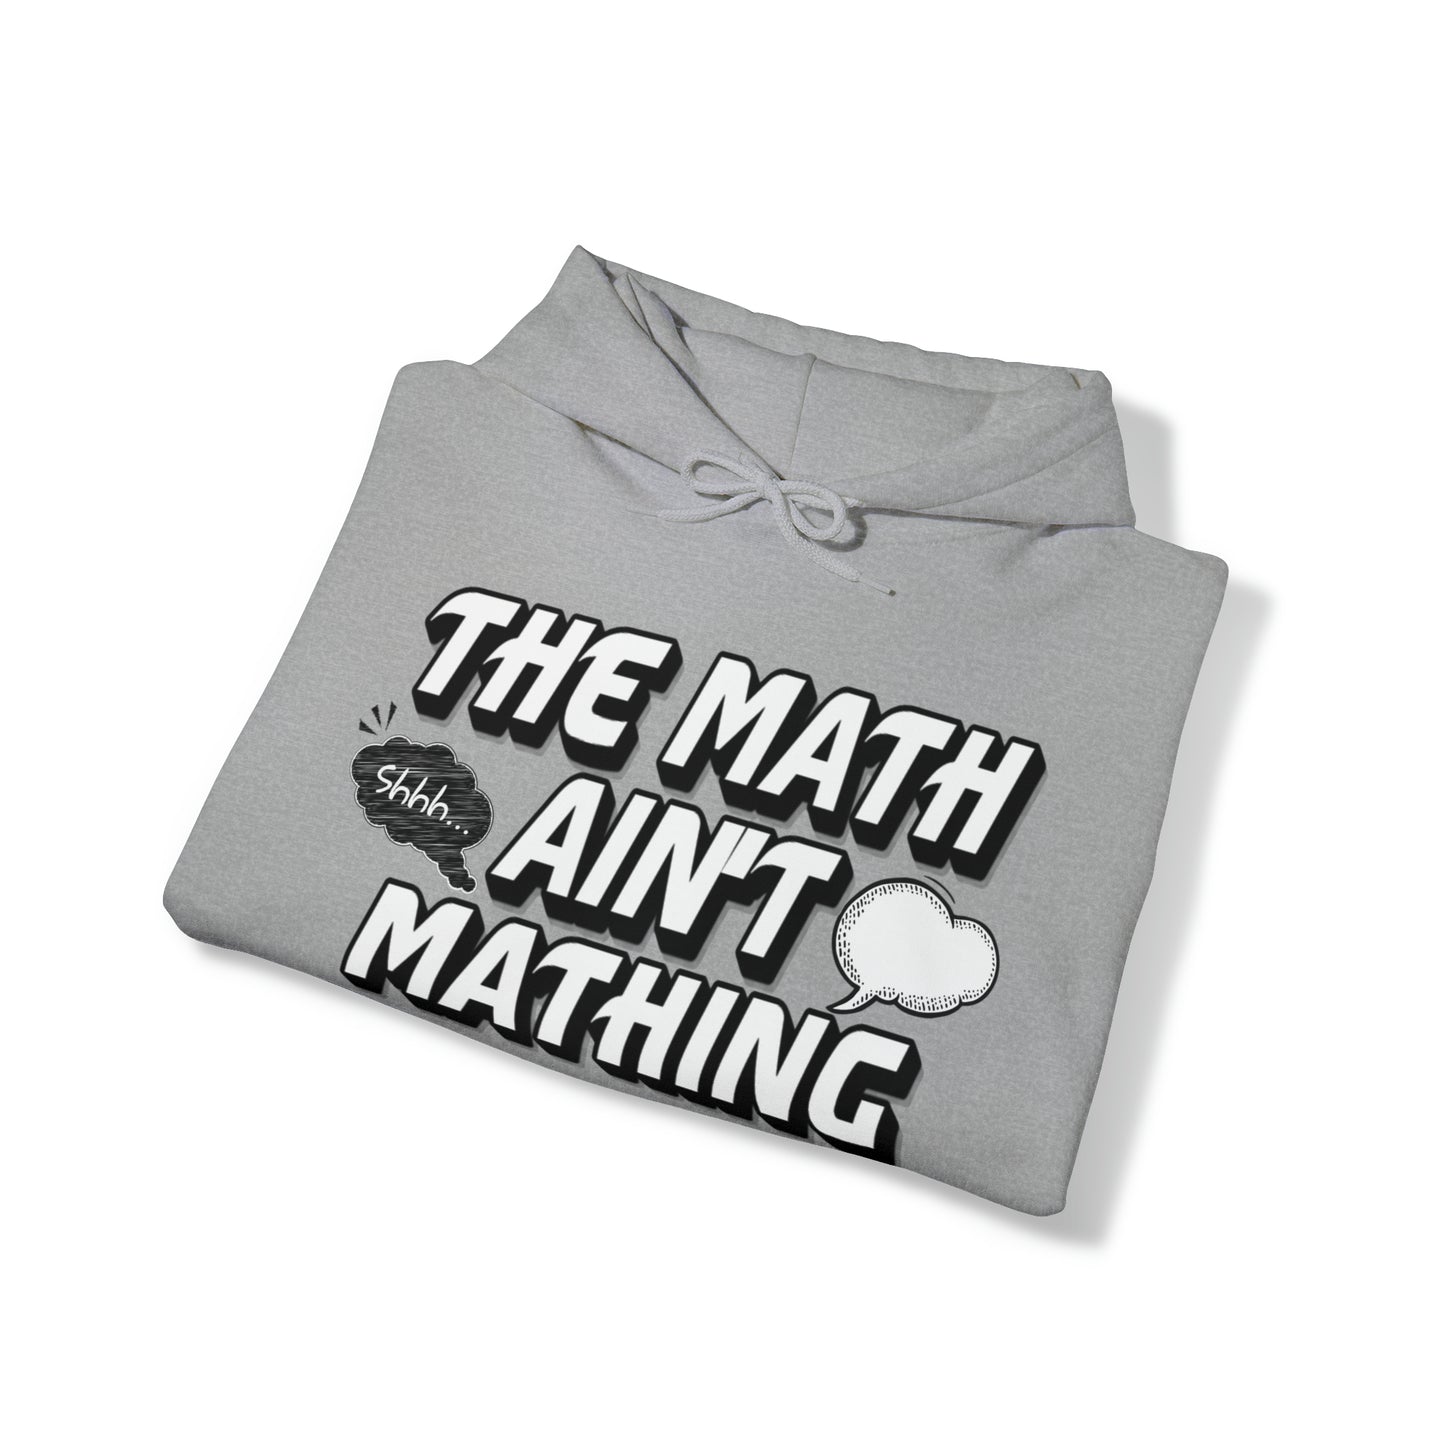 The Math Ain't Mathing Hooded Sweatshirt